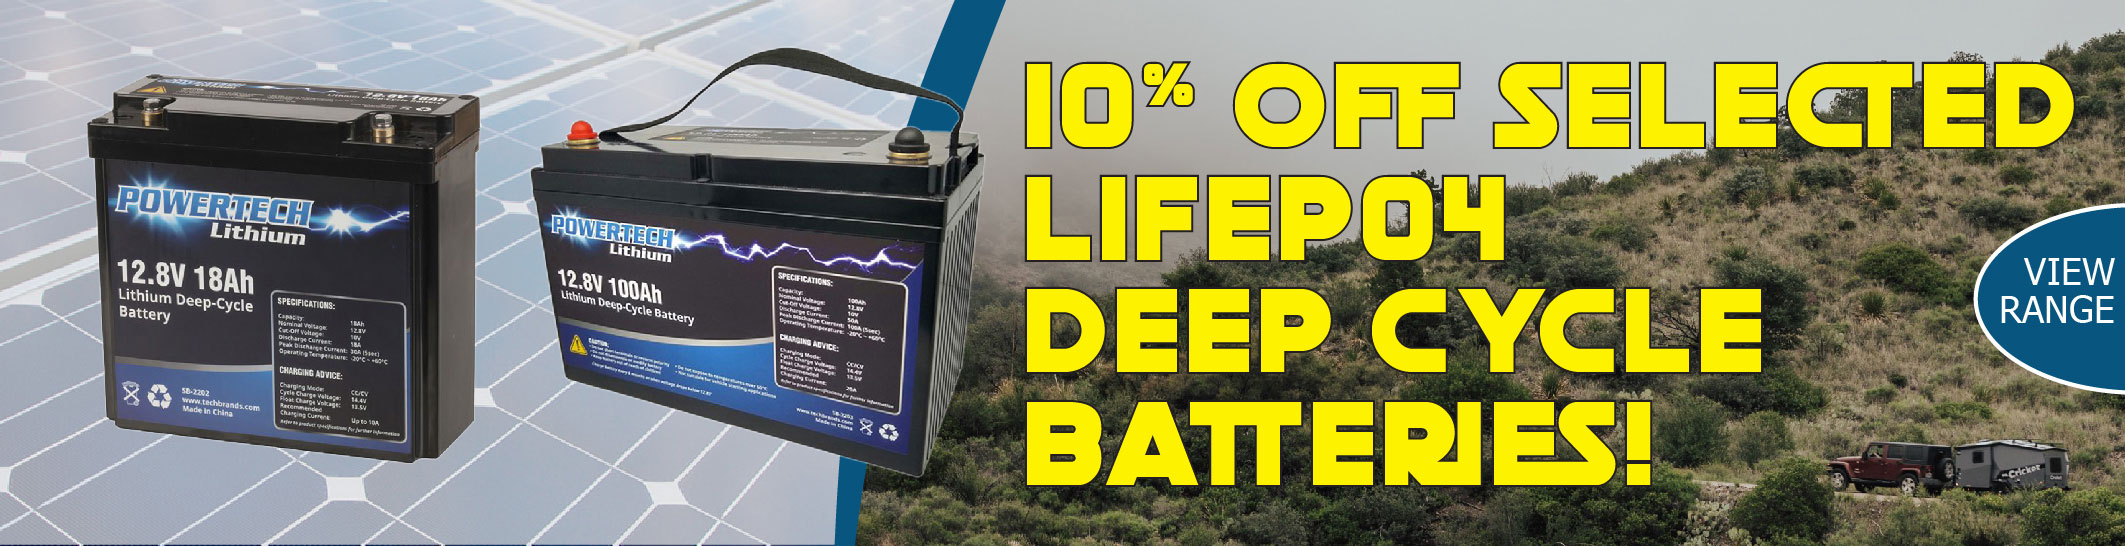 Lithium Deep Cycle Battry Sale